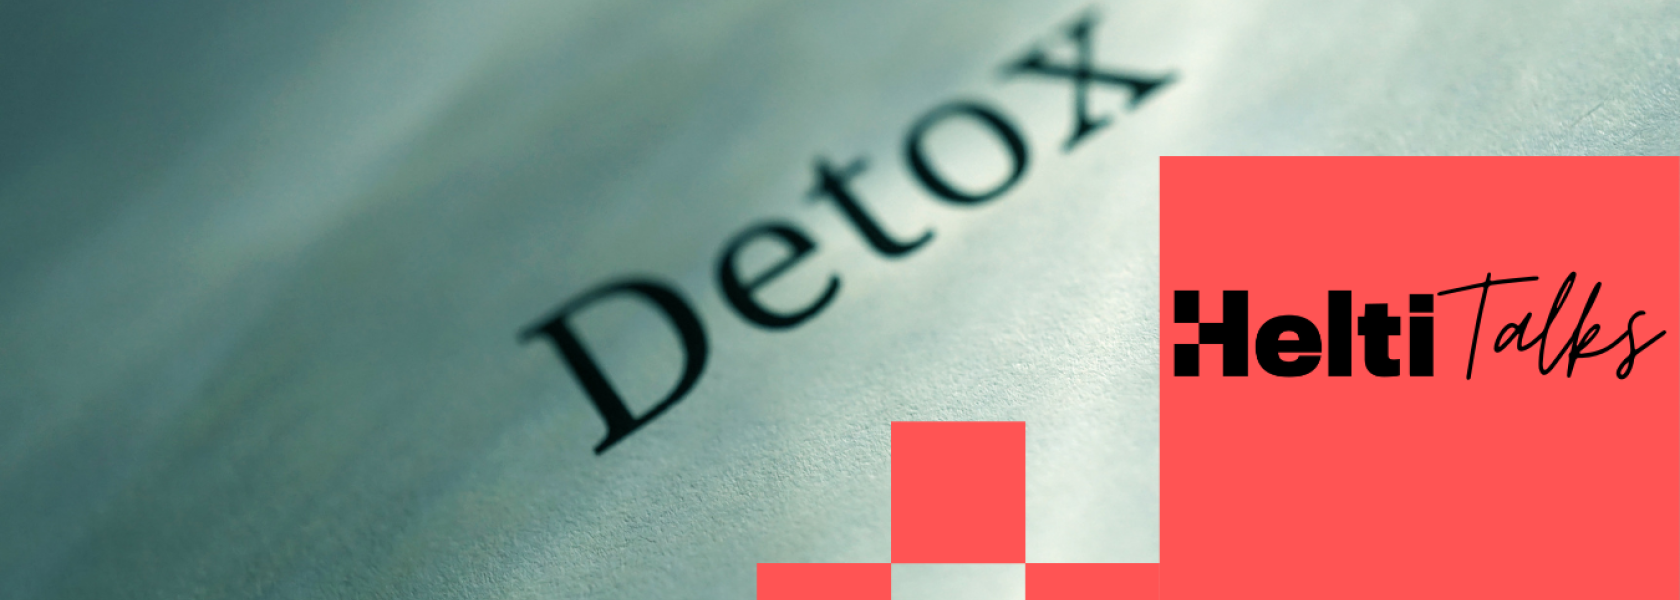 Detox&Drain, Detox, Healthy, Healthy Lifestyle, Heltitalks, Heltitude